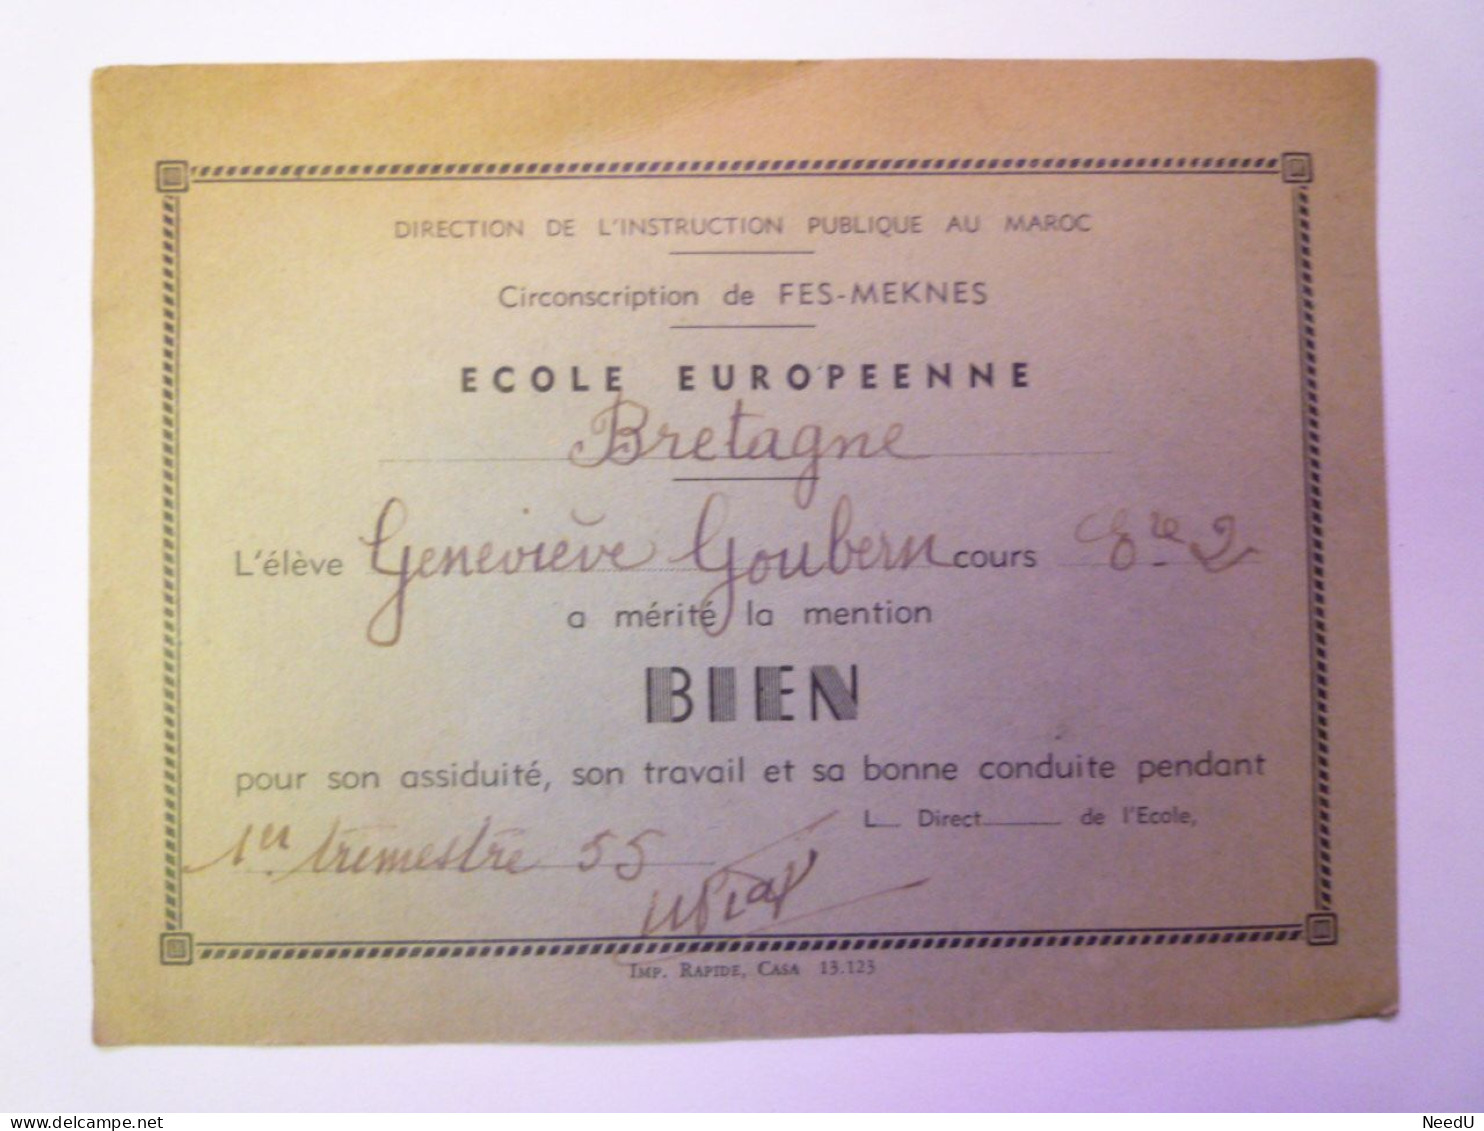 GP 2024 - 4  ECOLE EUROPEENNE  "BRETAGNE"  (Maroc  -  FES-MEKNES)  MENTION BIEN  1955   XXX - Diplomas Y Calificaciones Escolares